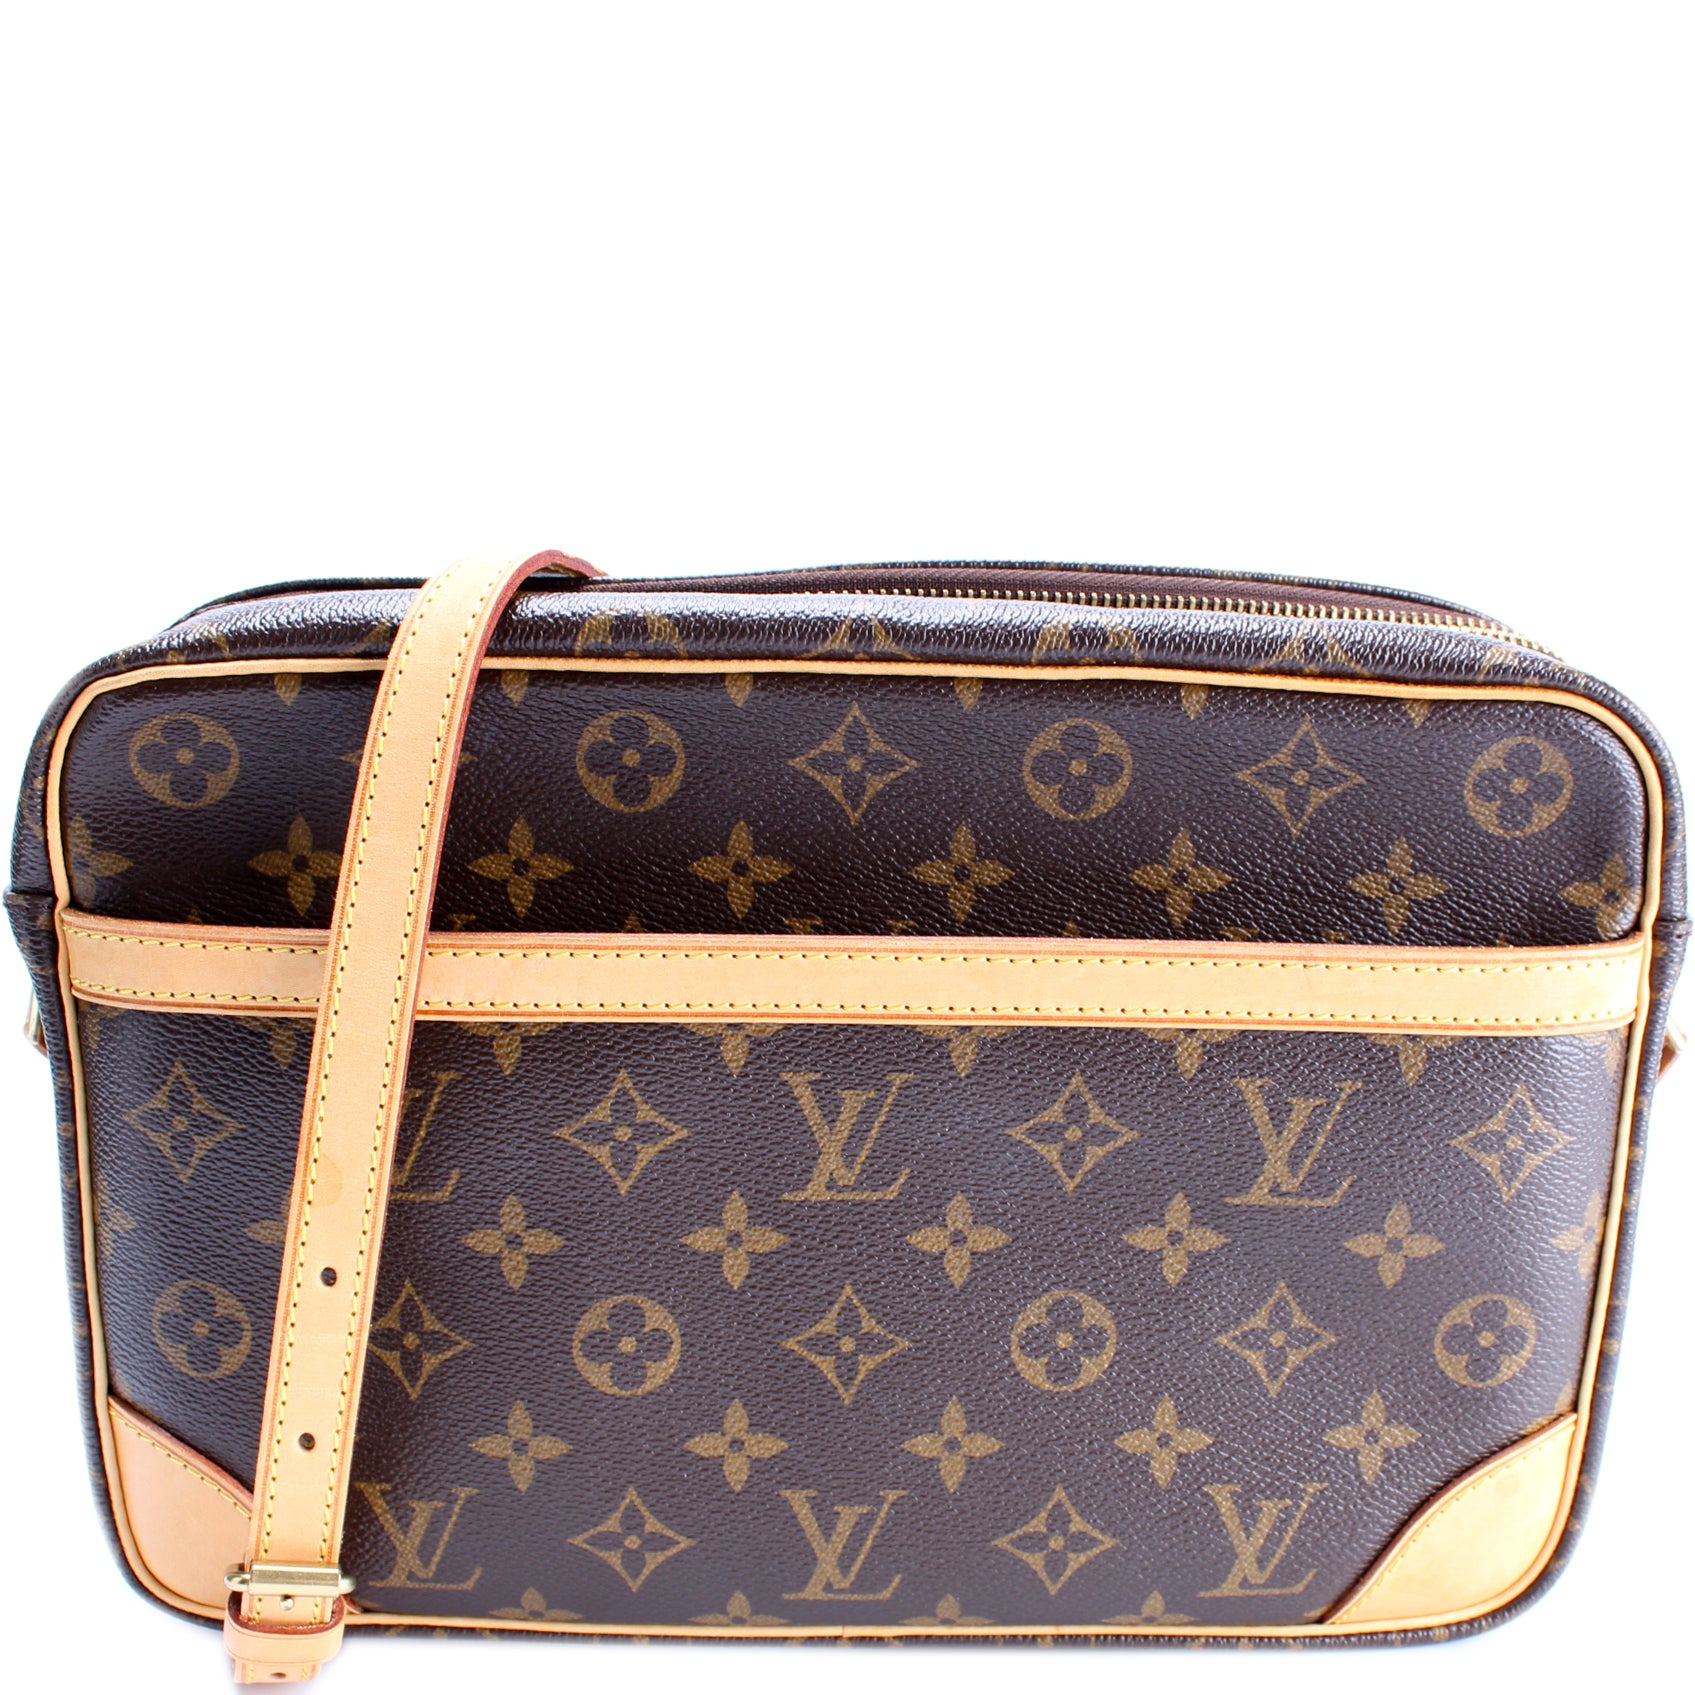 Vintage Louis Vuitton Trocadero 30 Monogram Canvas Shoulder Bag at